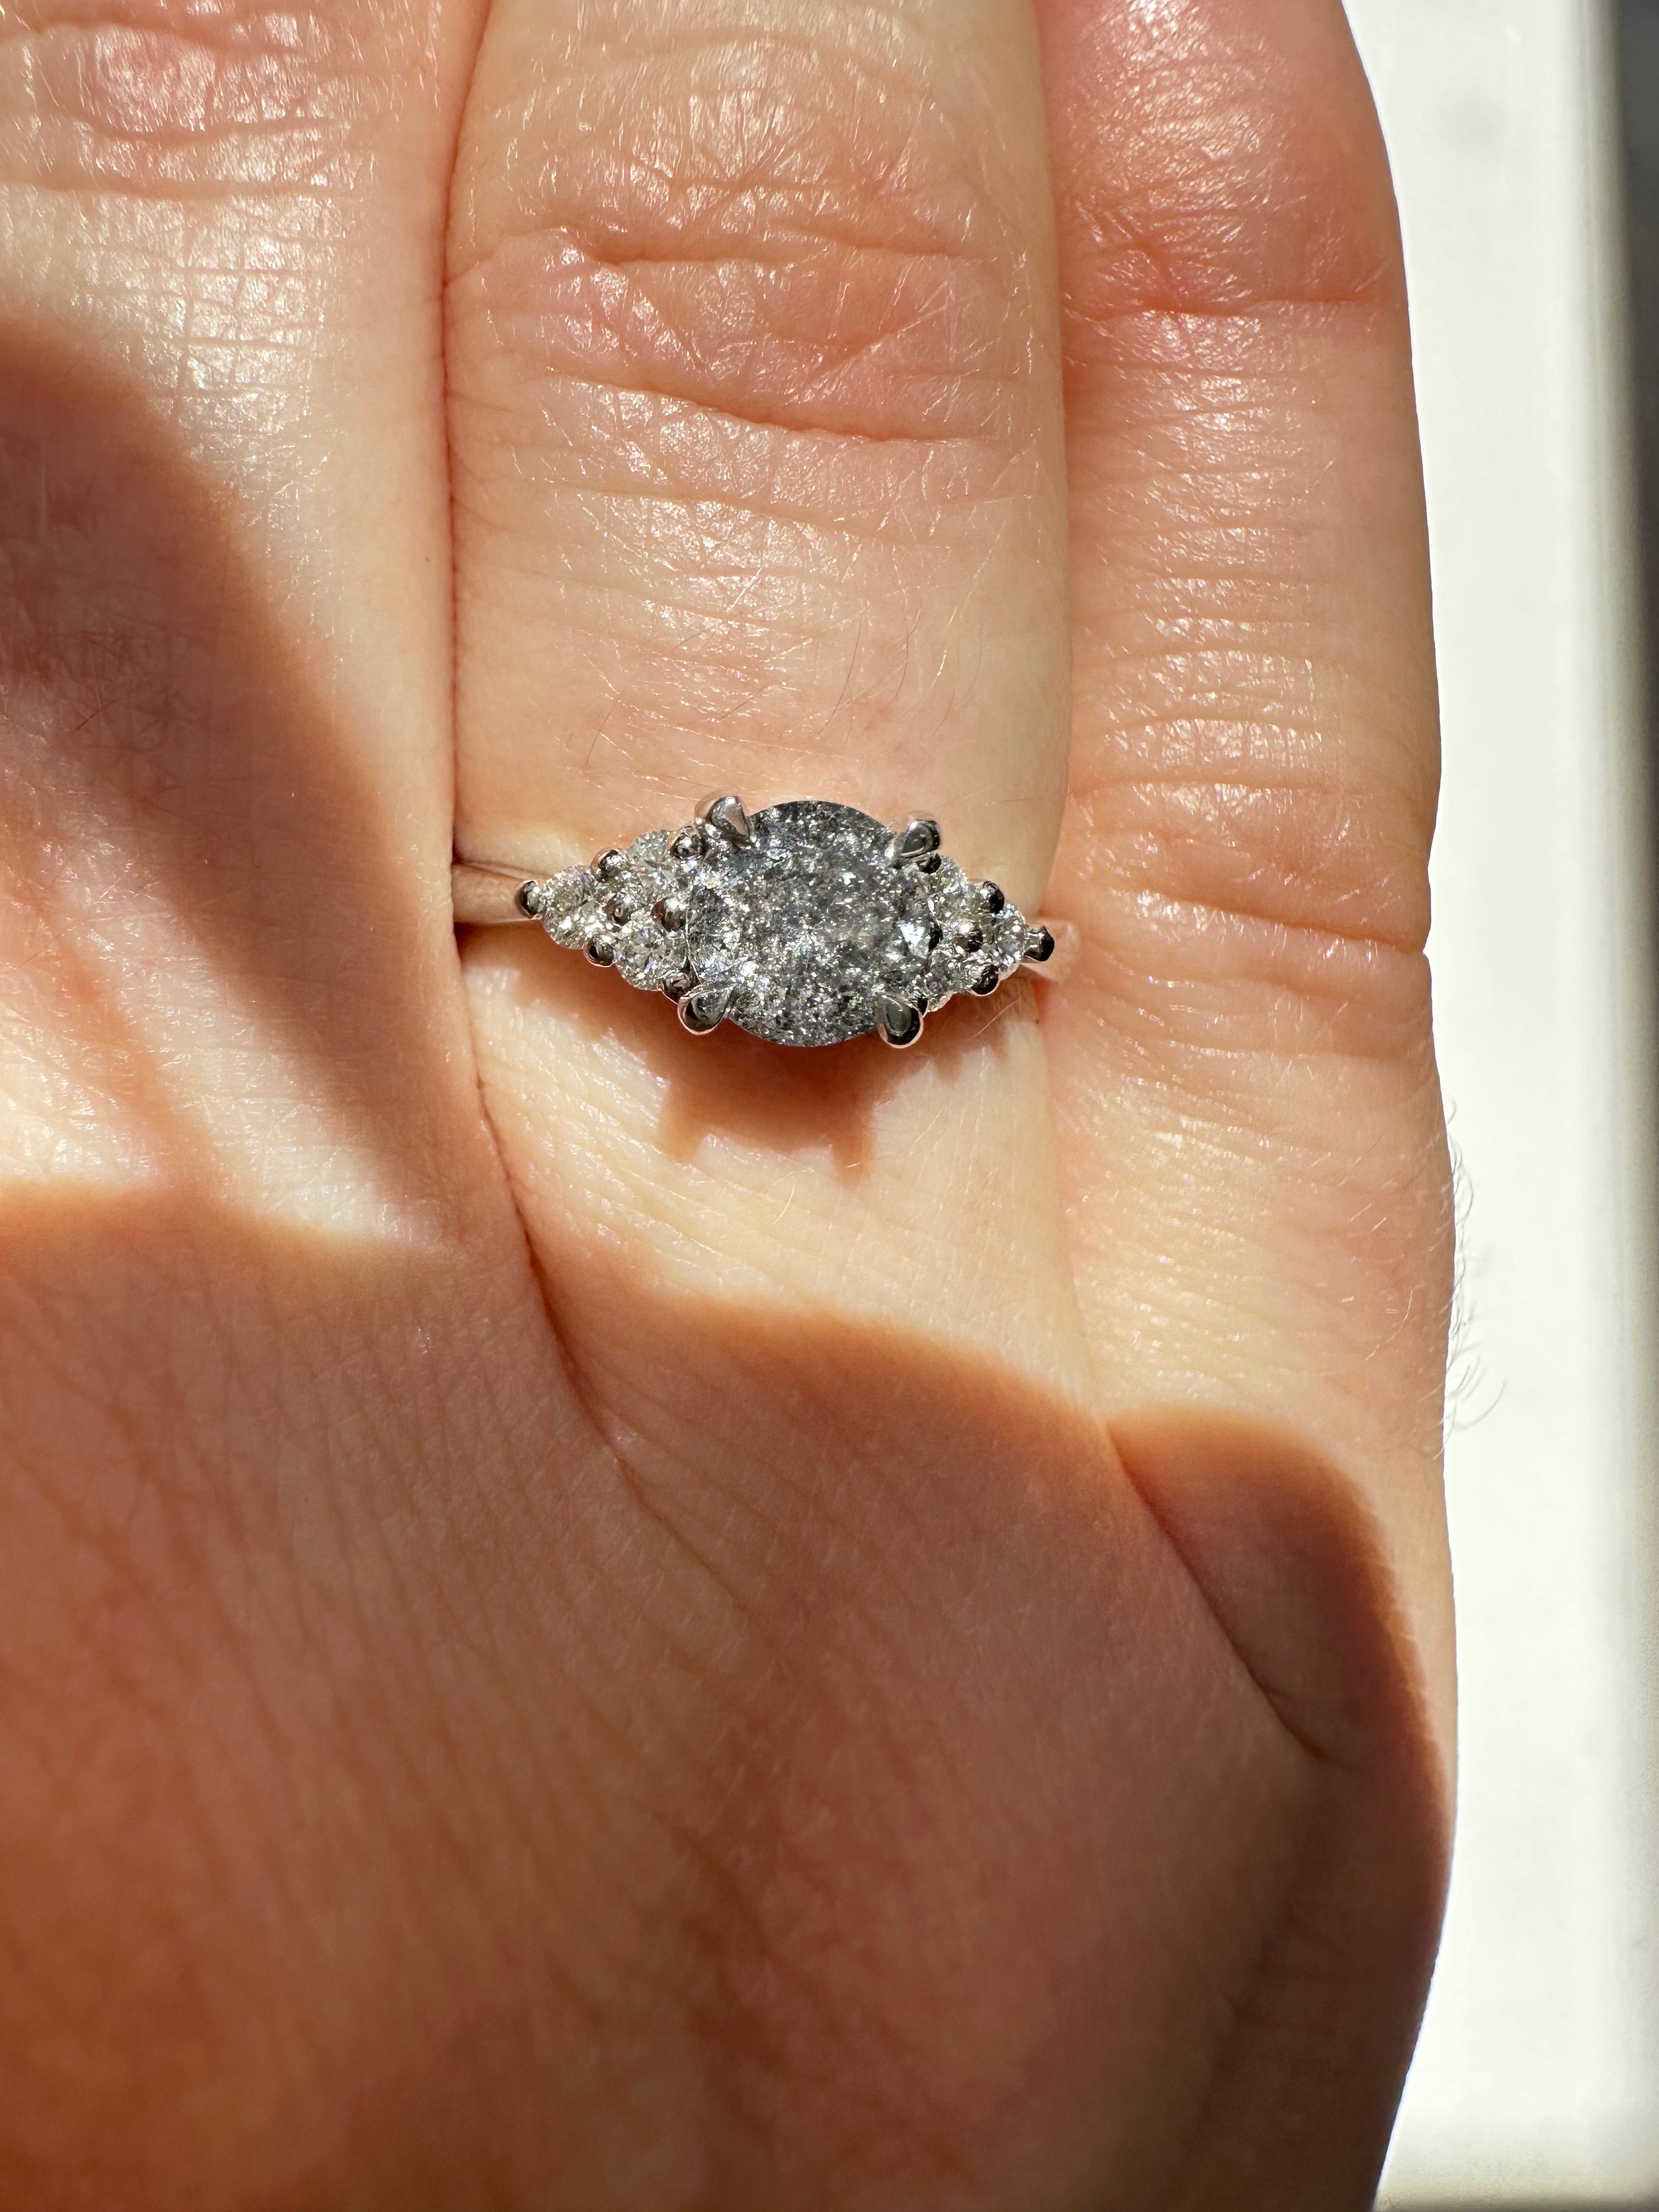 276. Cape Diamonds Fairy Diamond Engagement Ring | : Cape Diamonds